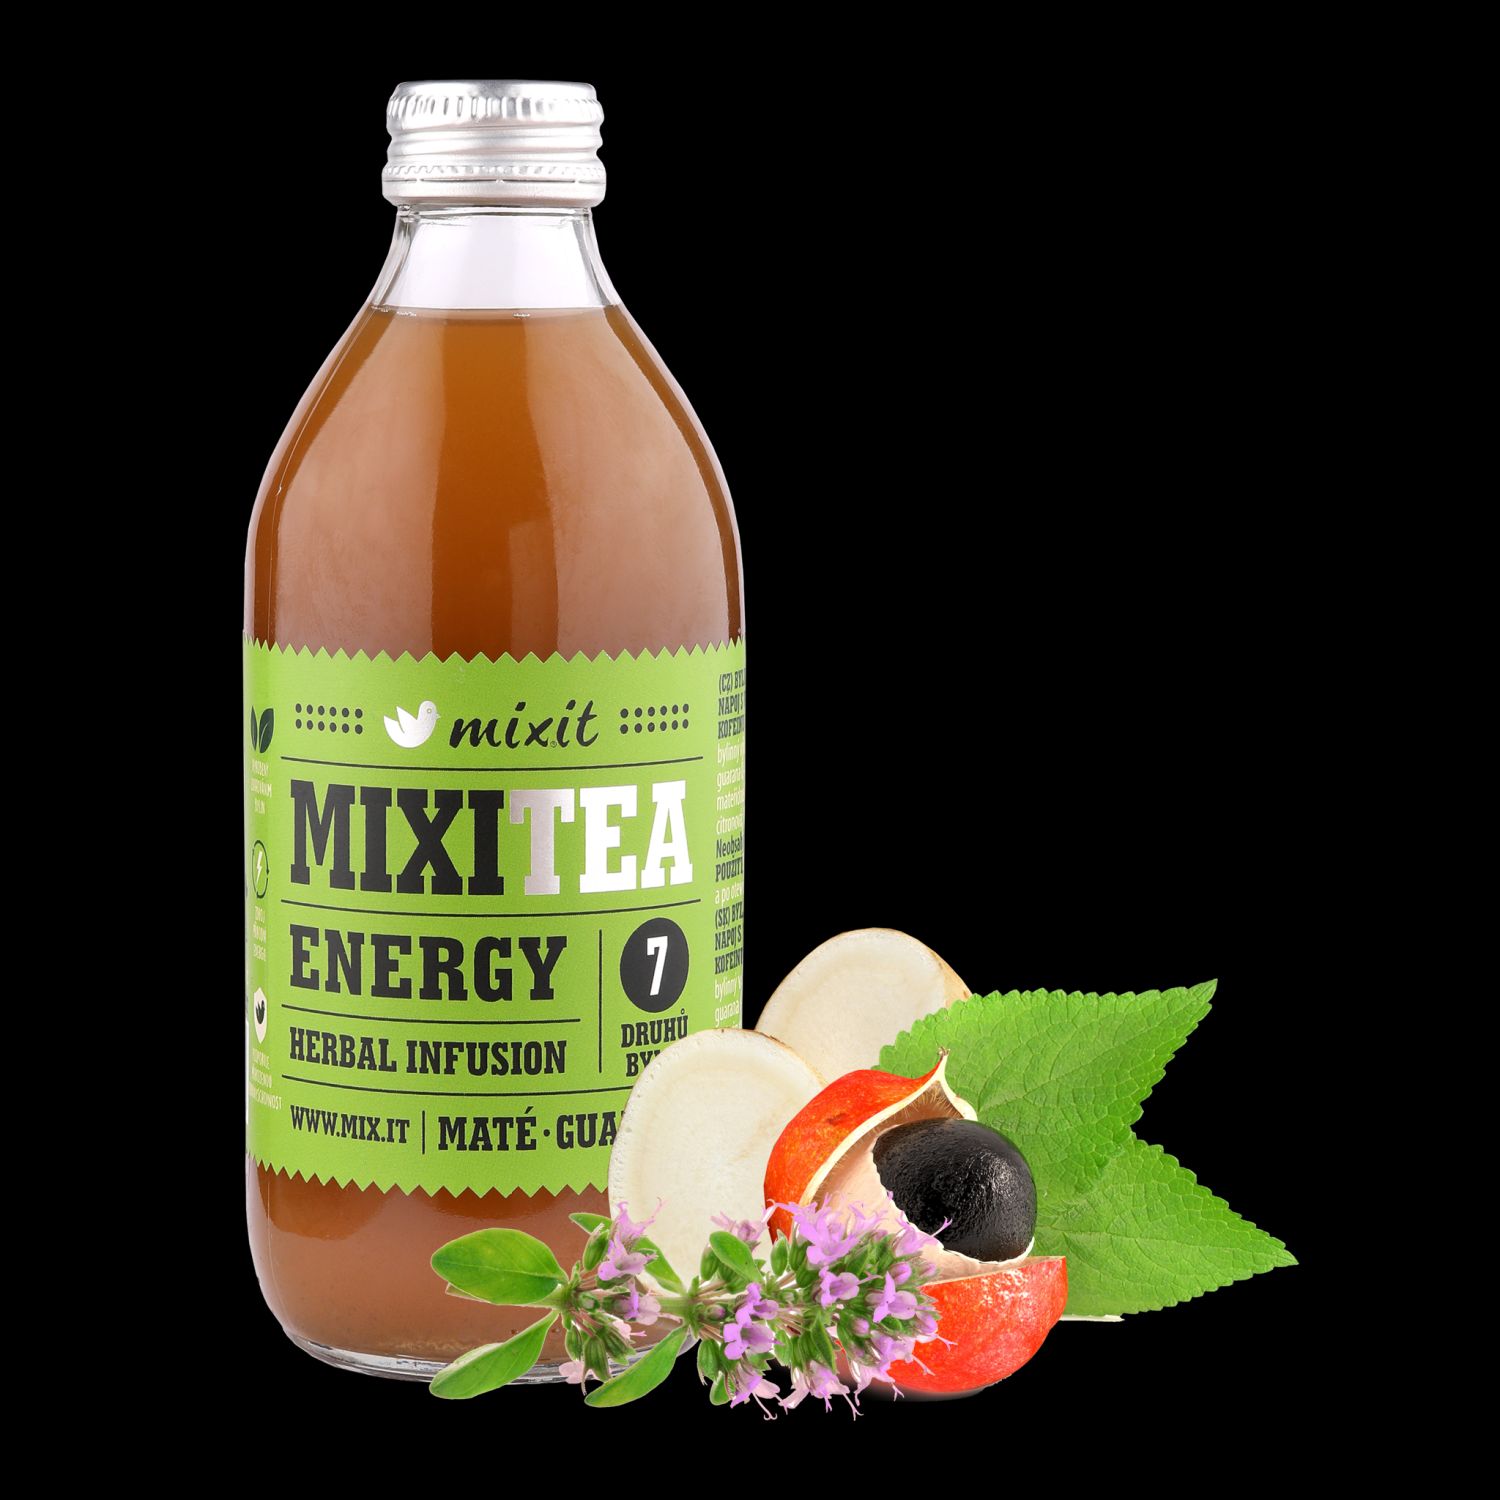 Mixitea Energy